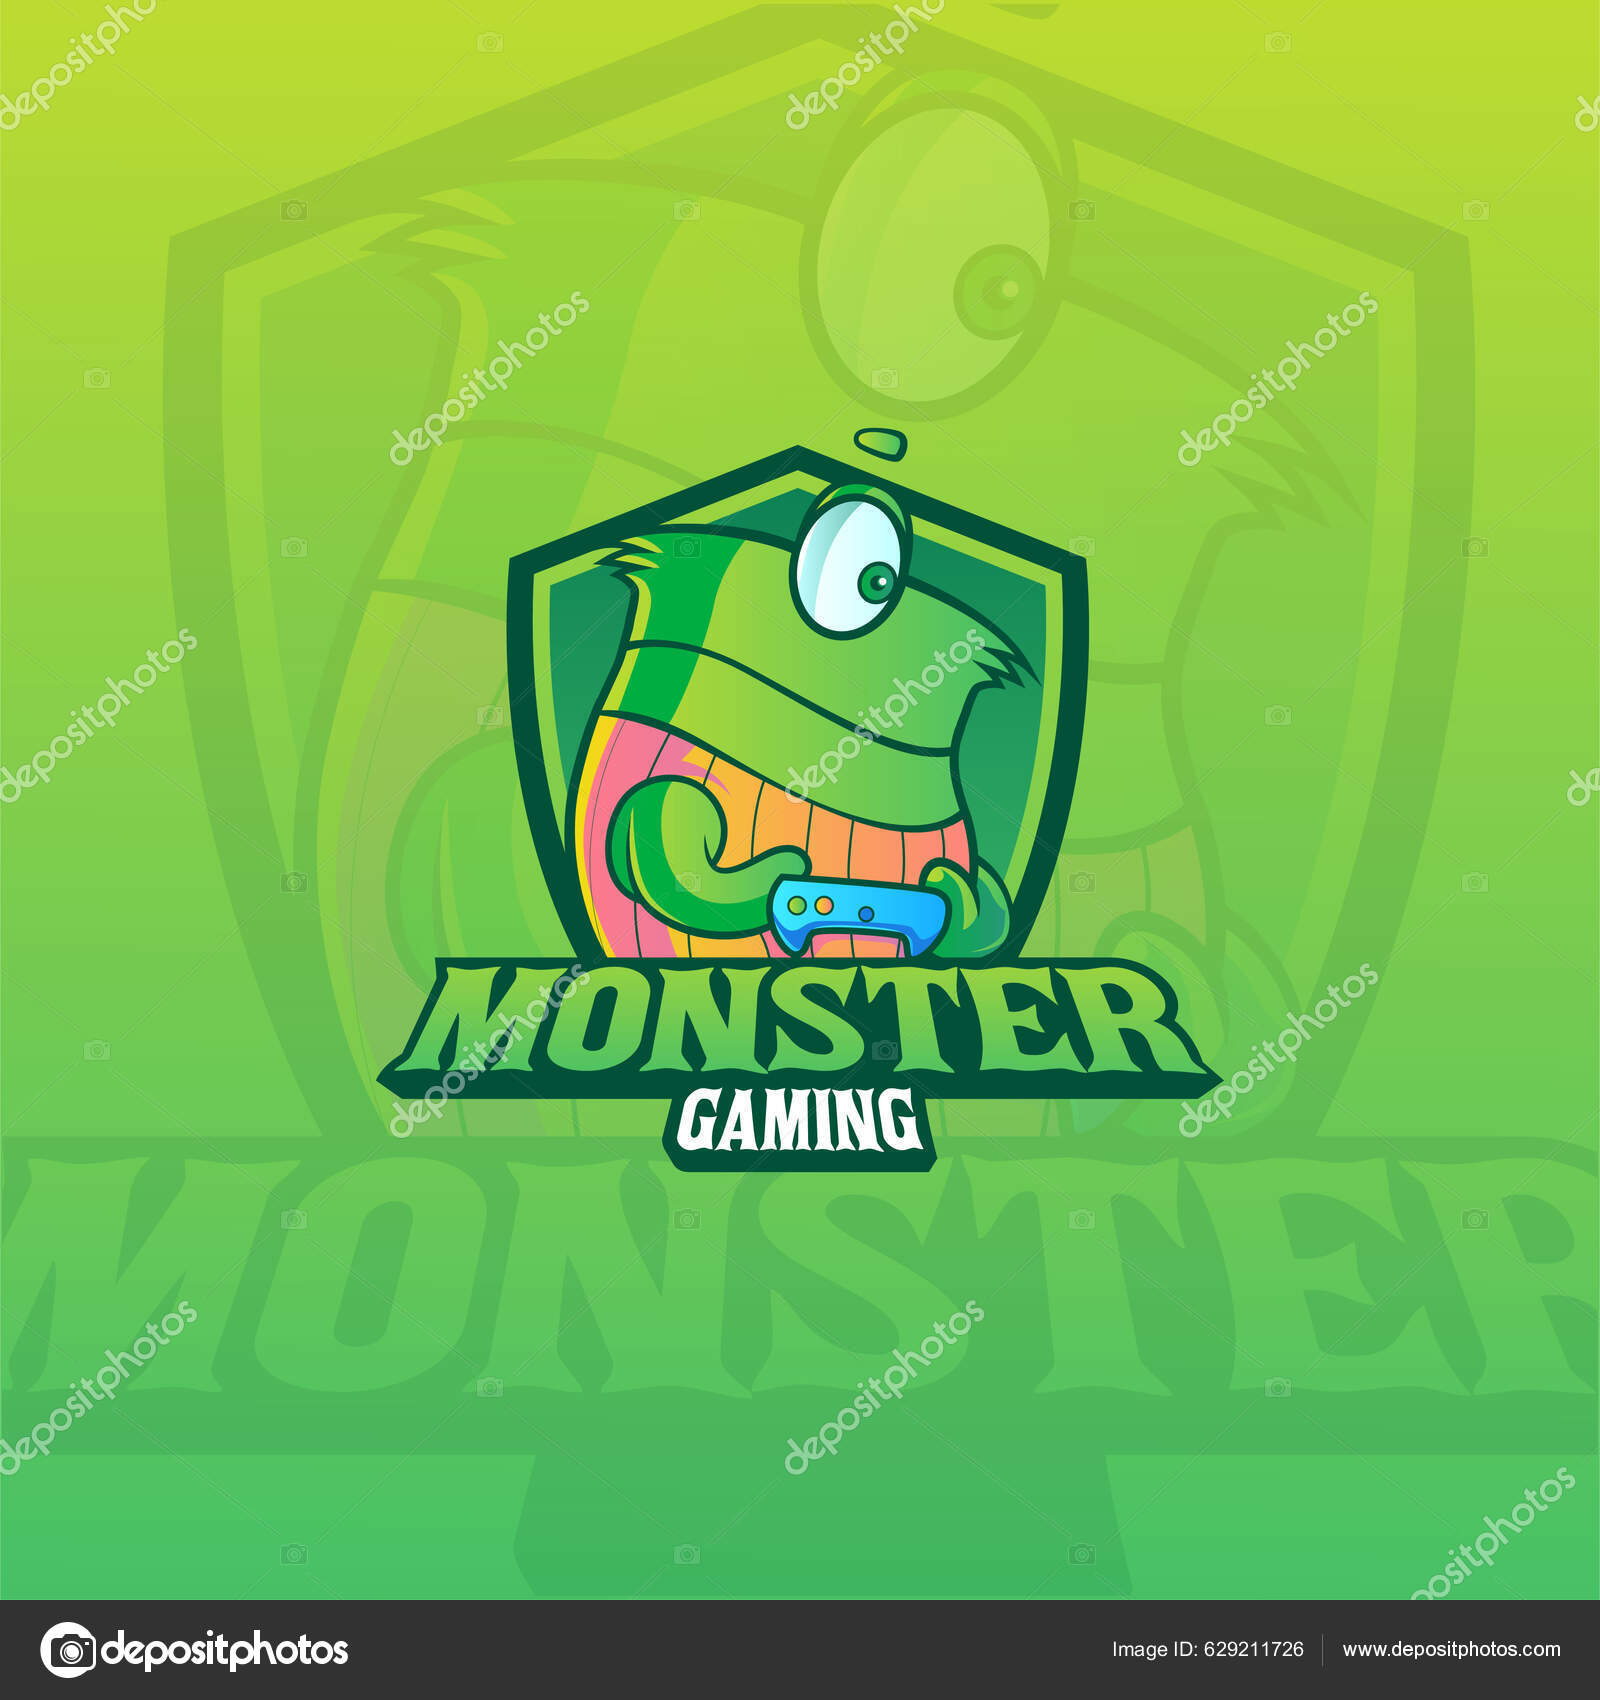 Monster gaming logo Vectors & Illustrations for Free Download | Freepik